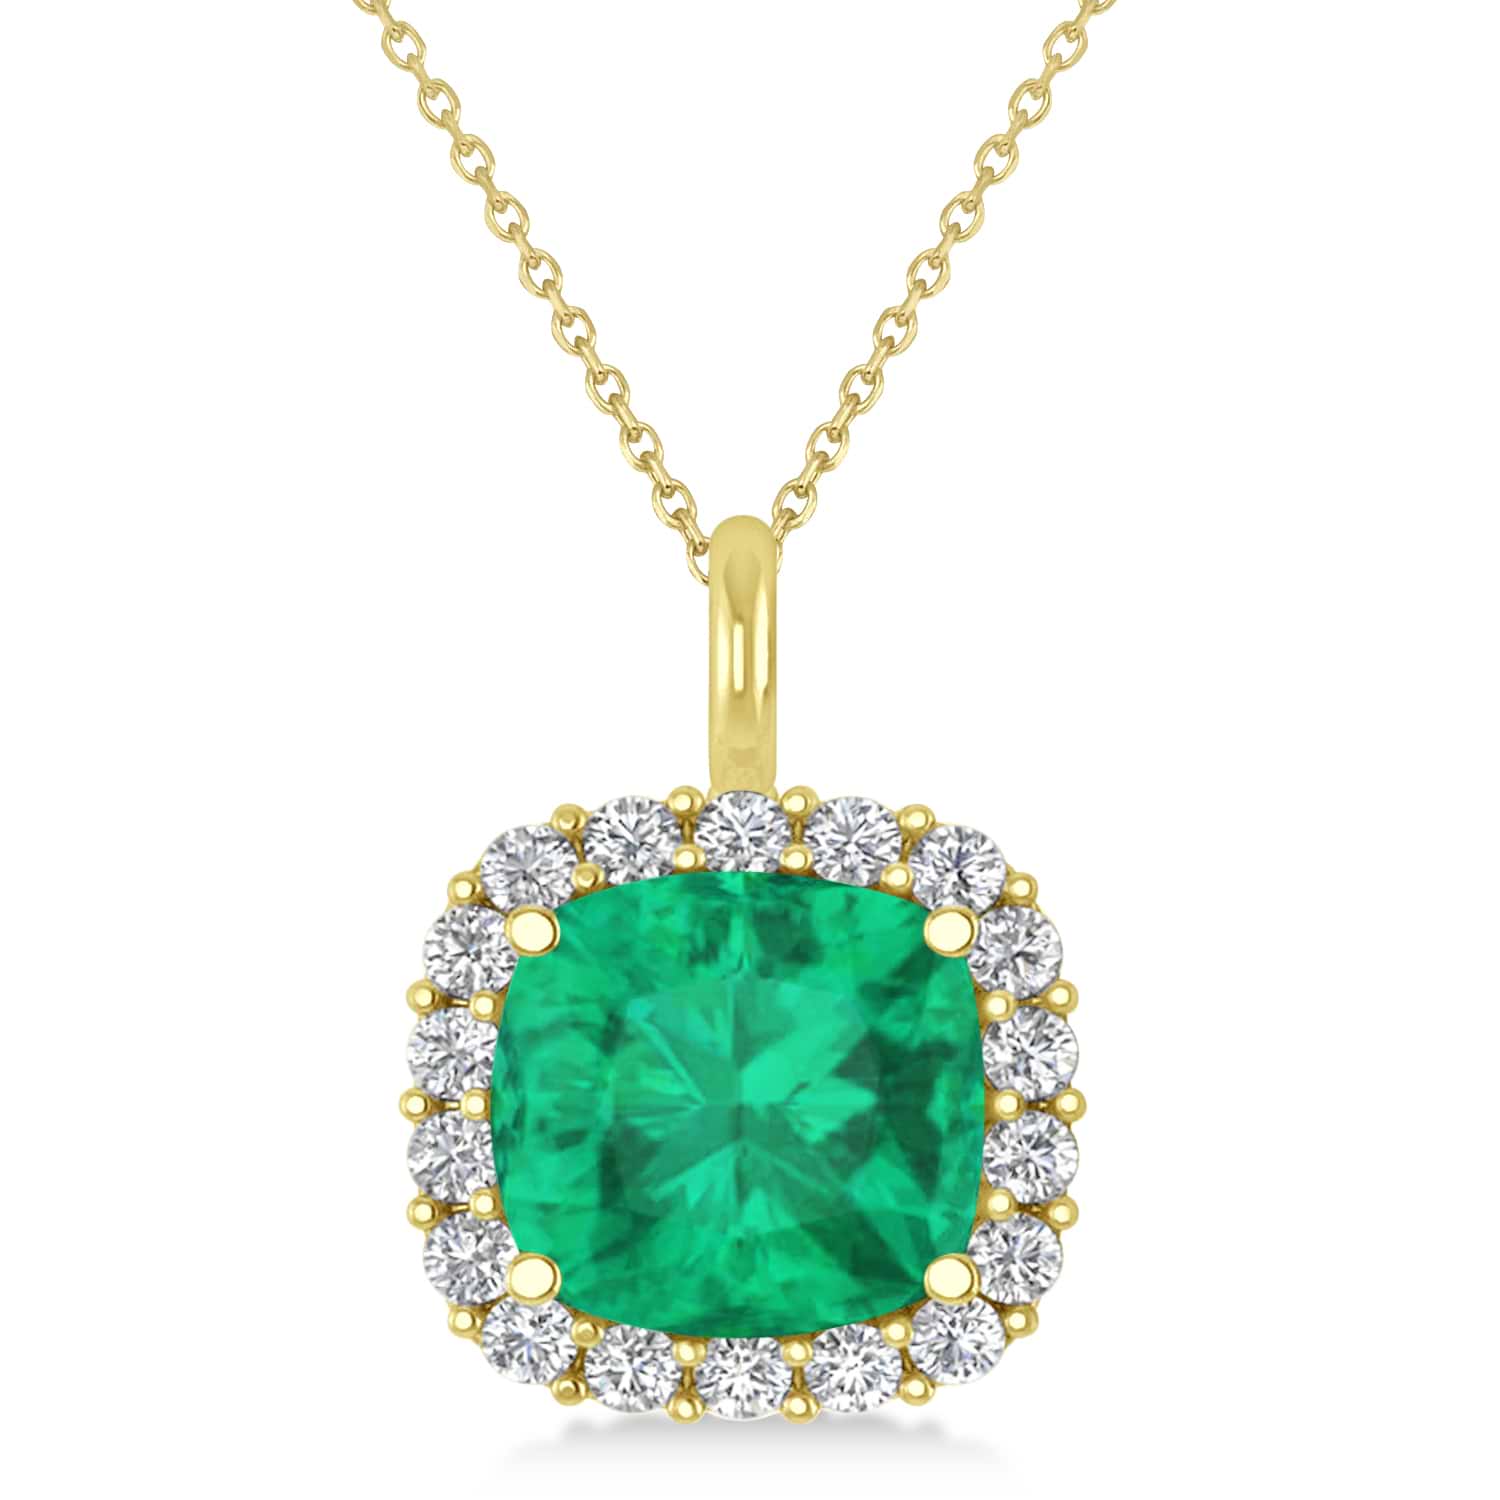 Cushion Cut Emerald & Diamond Halo Pendant 14k Yellow Gold (2.96ct)